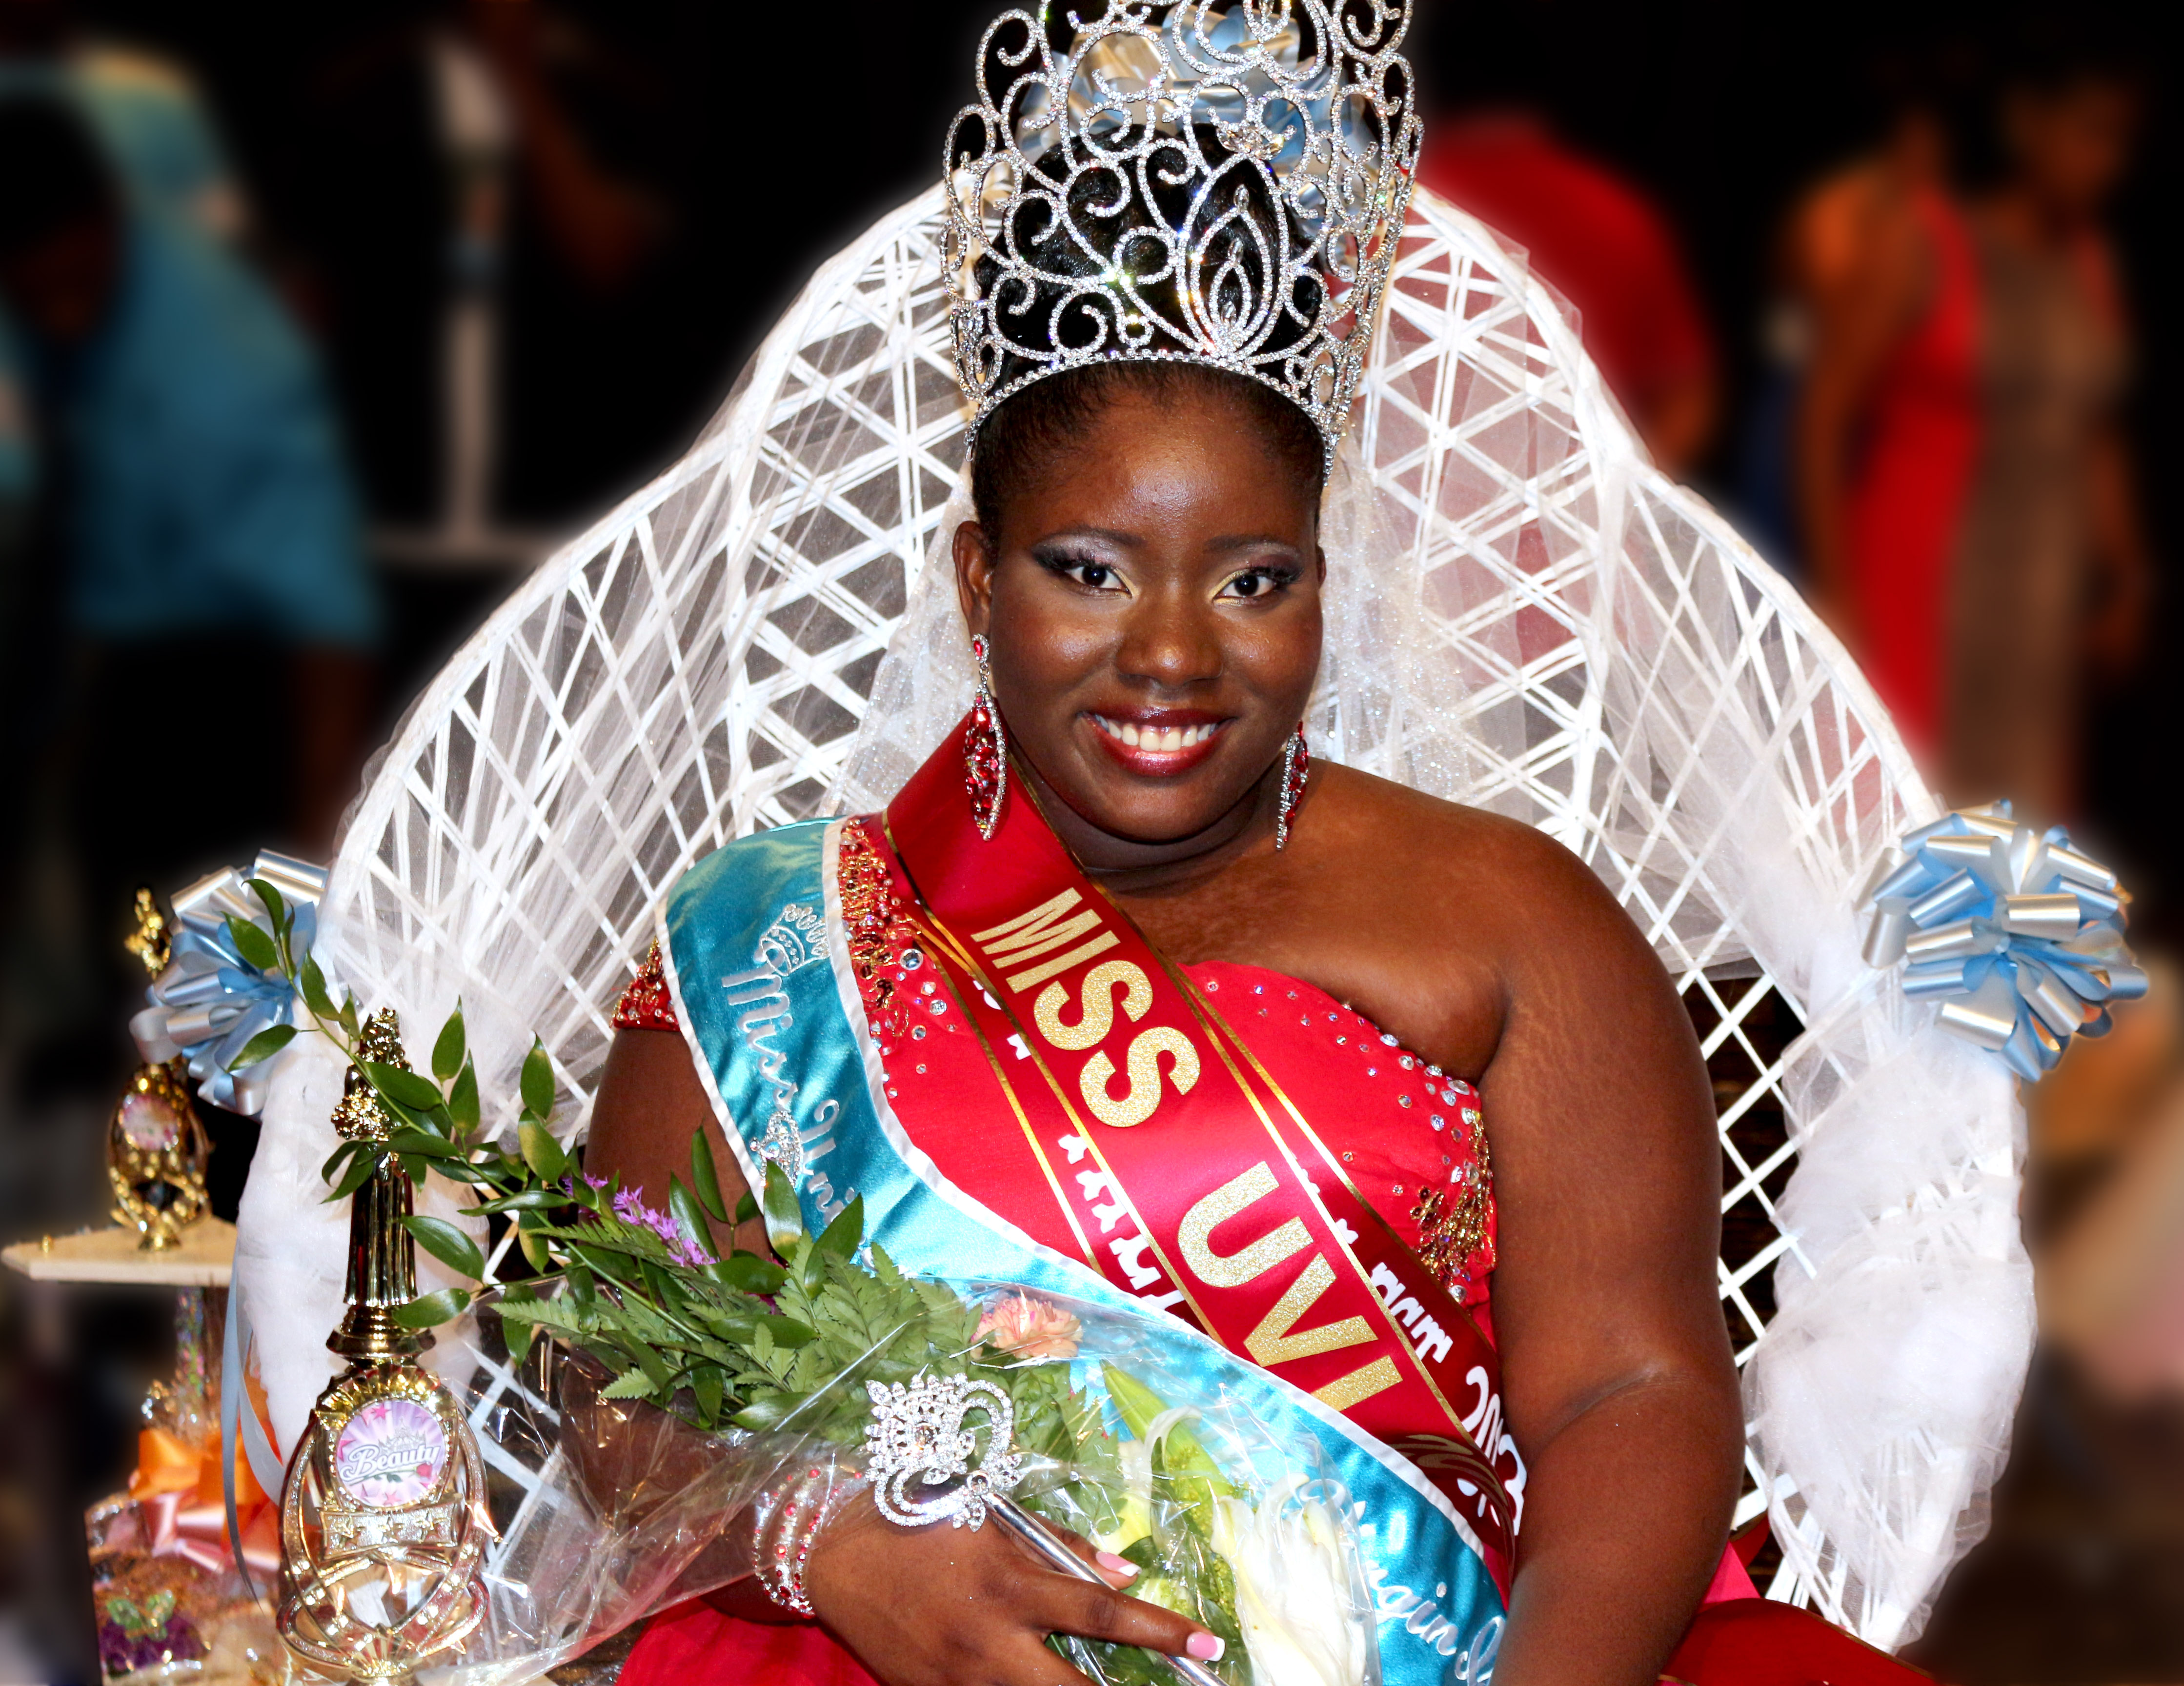 Charles Crowned Miss University of the Virgin Islands